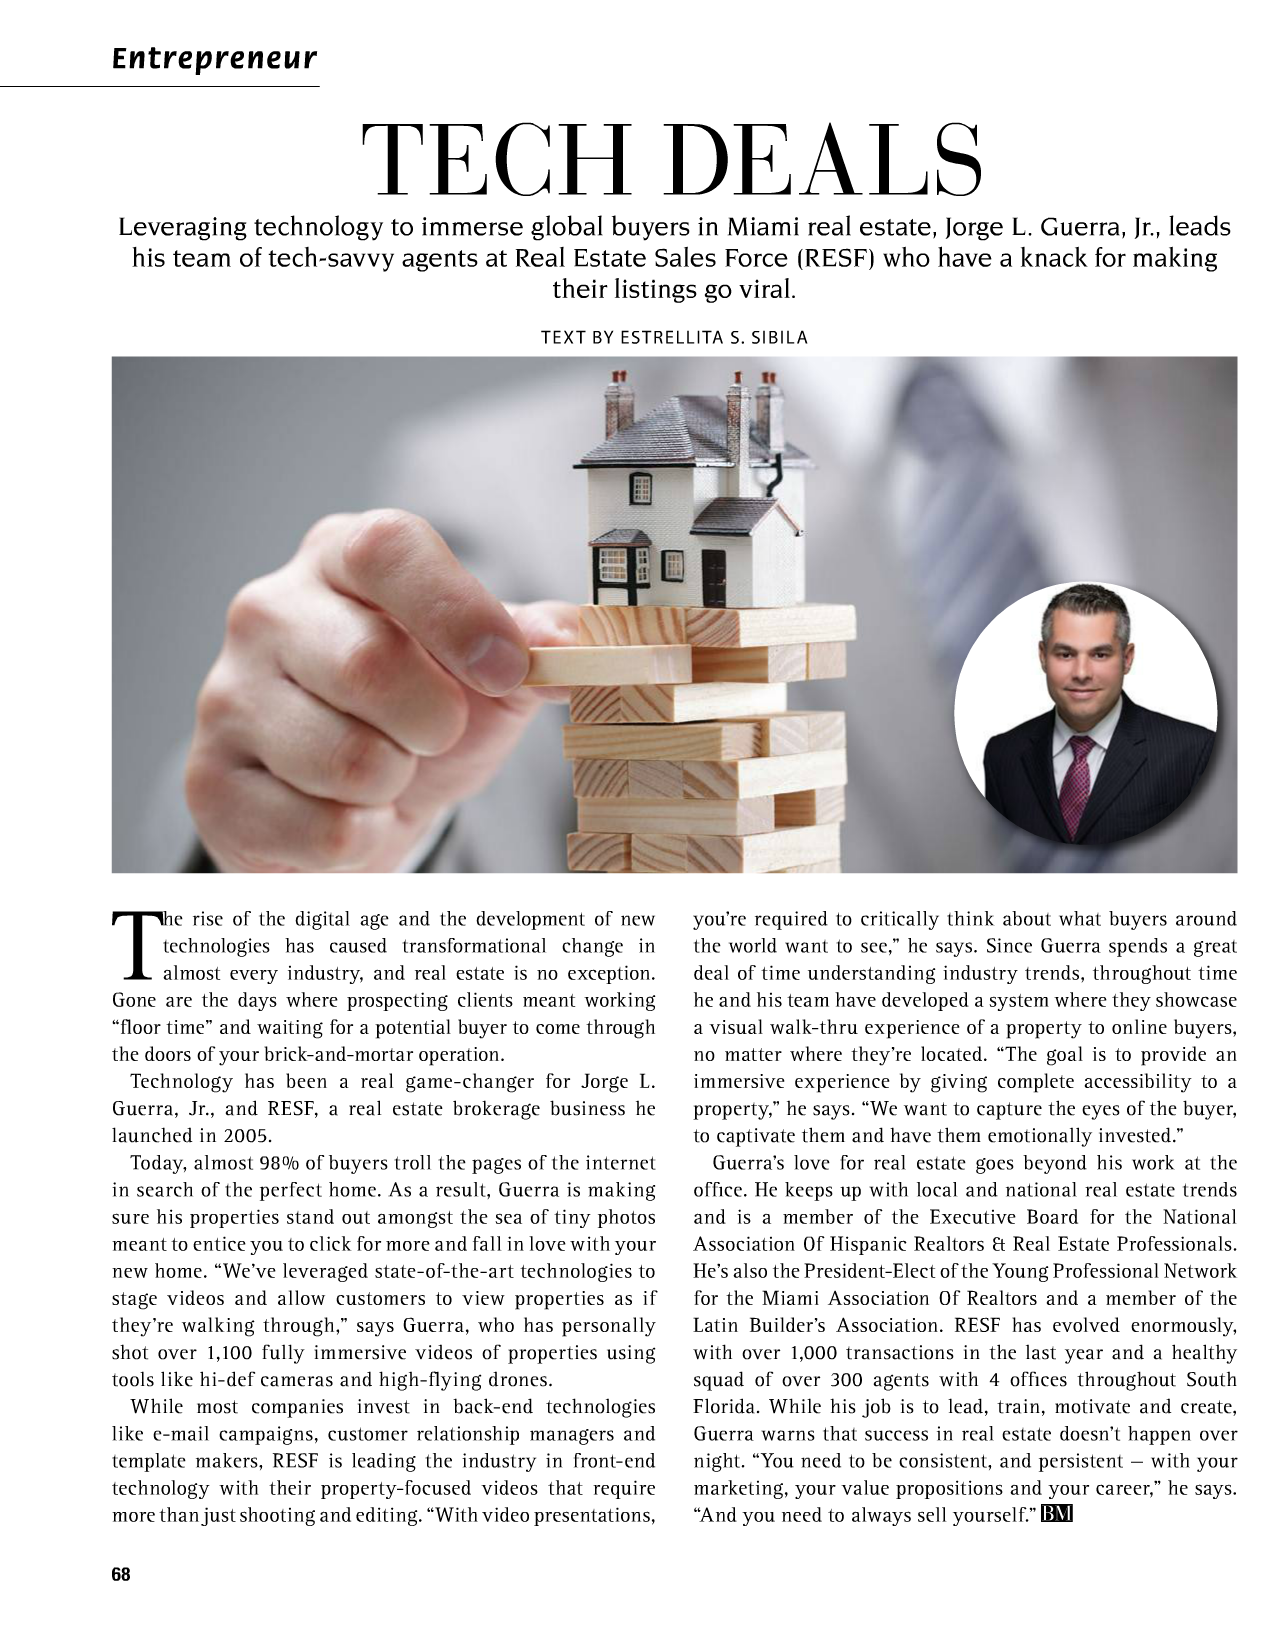 Brickell Magazine features entrepreneur Jorge Guerra Jr.